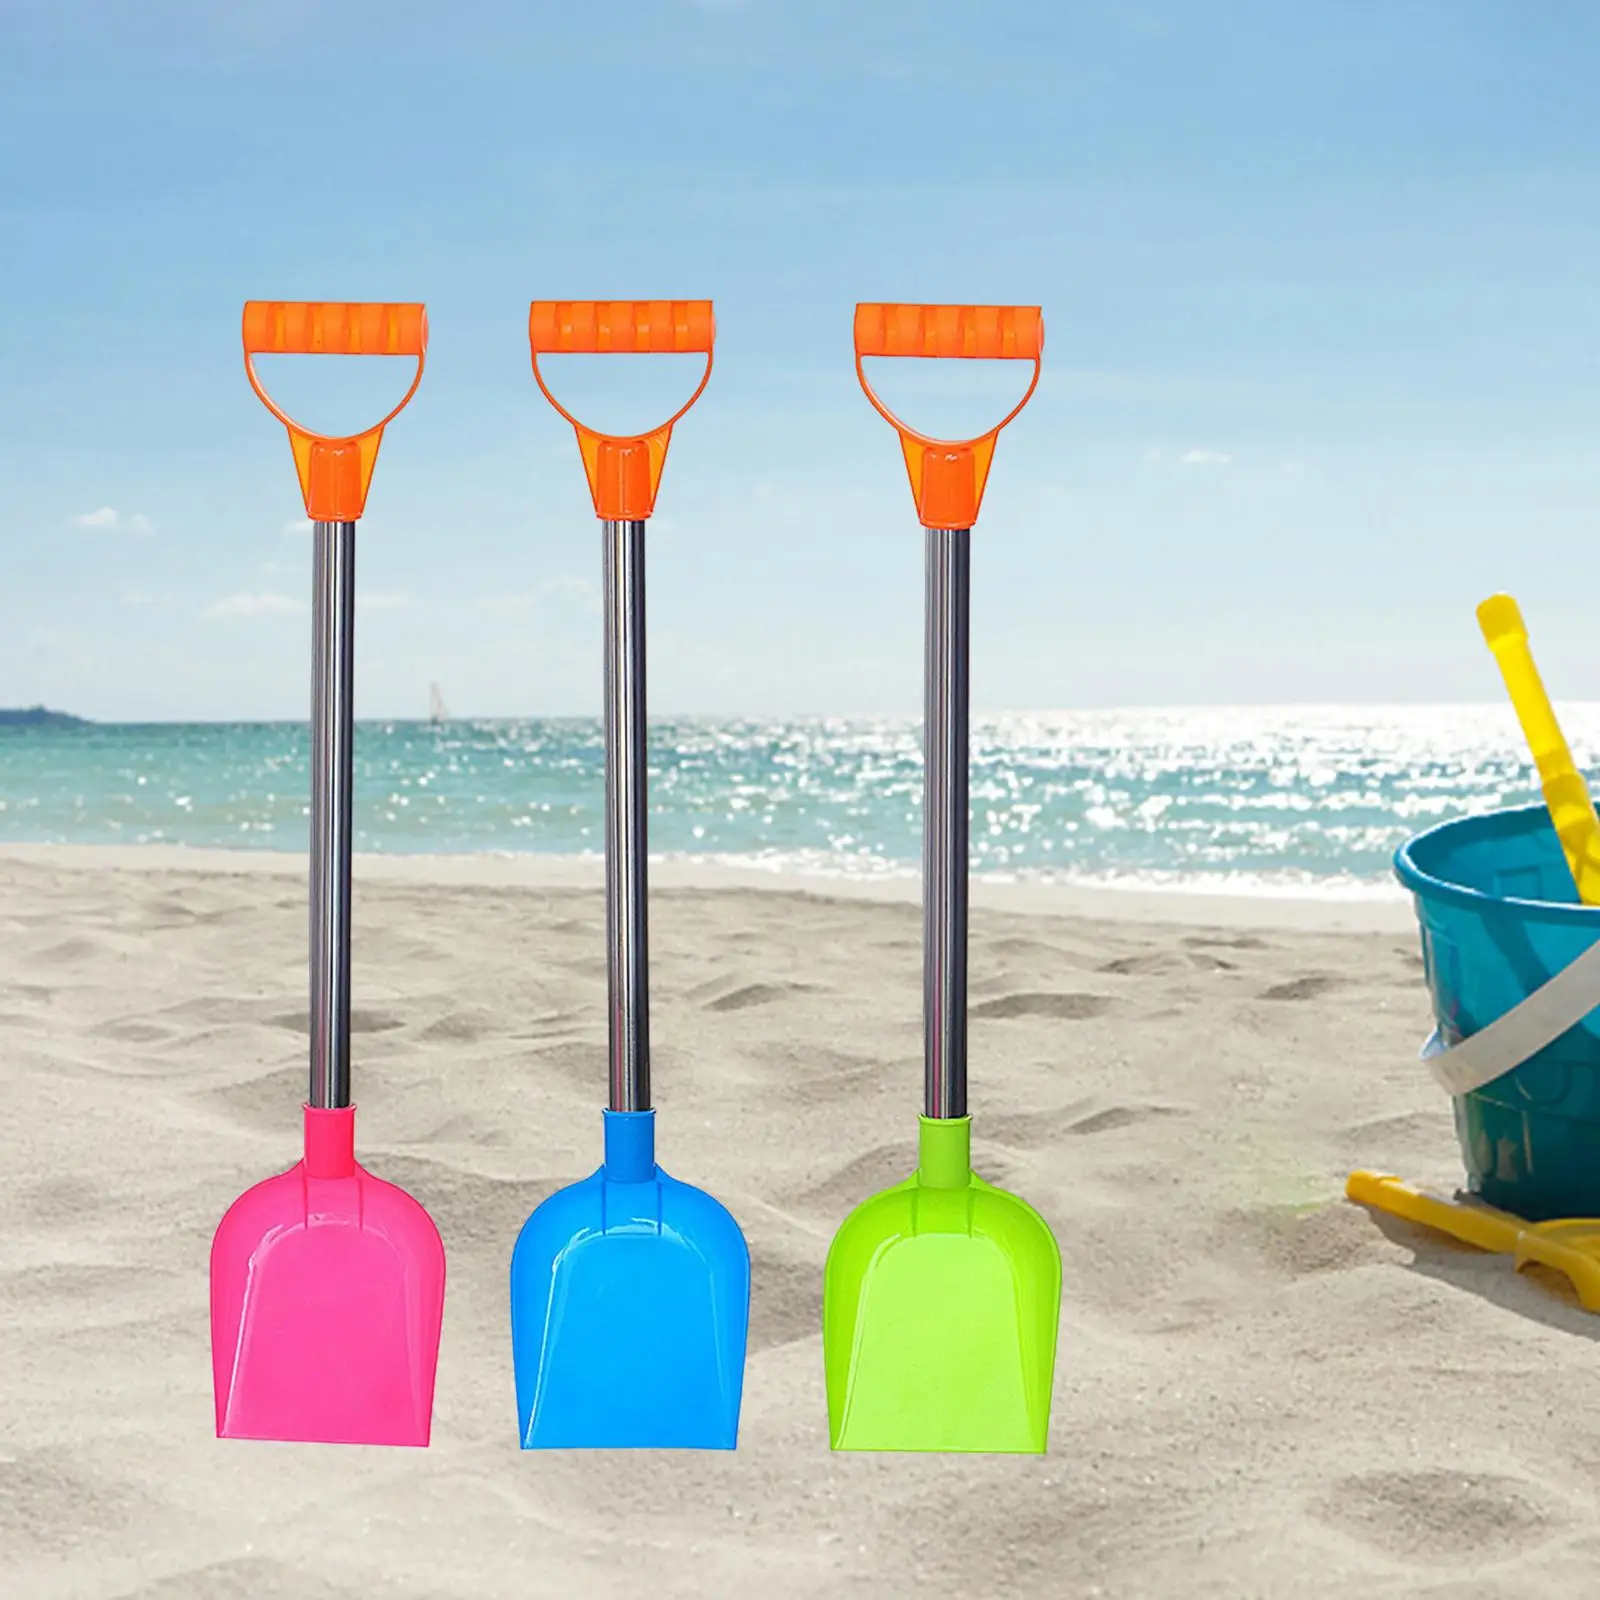 3x Sand Toys Beach Set Outdoor Toy Durable Gardening Tool Garden Toy for Outdoor Indoor Party Favor Toddlers Children Boy Girl